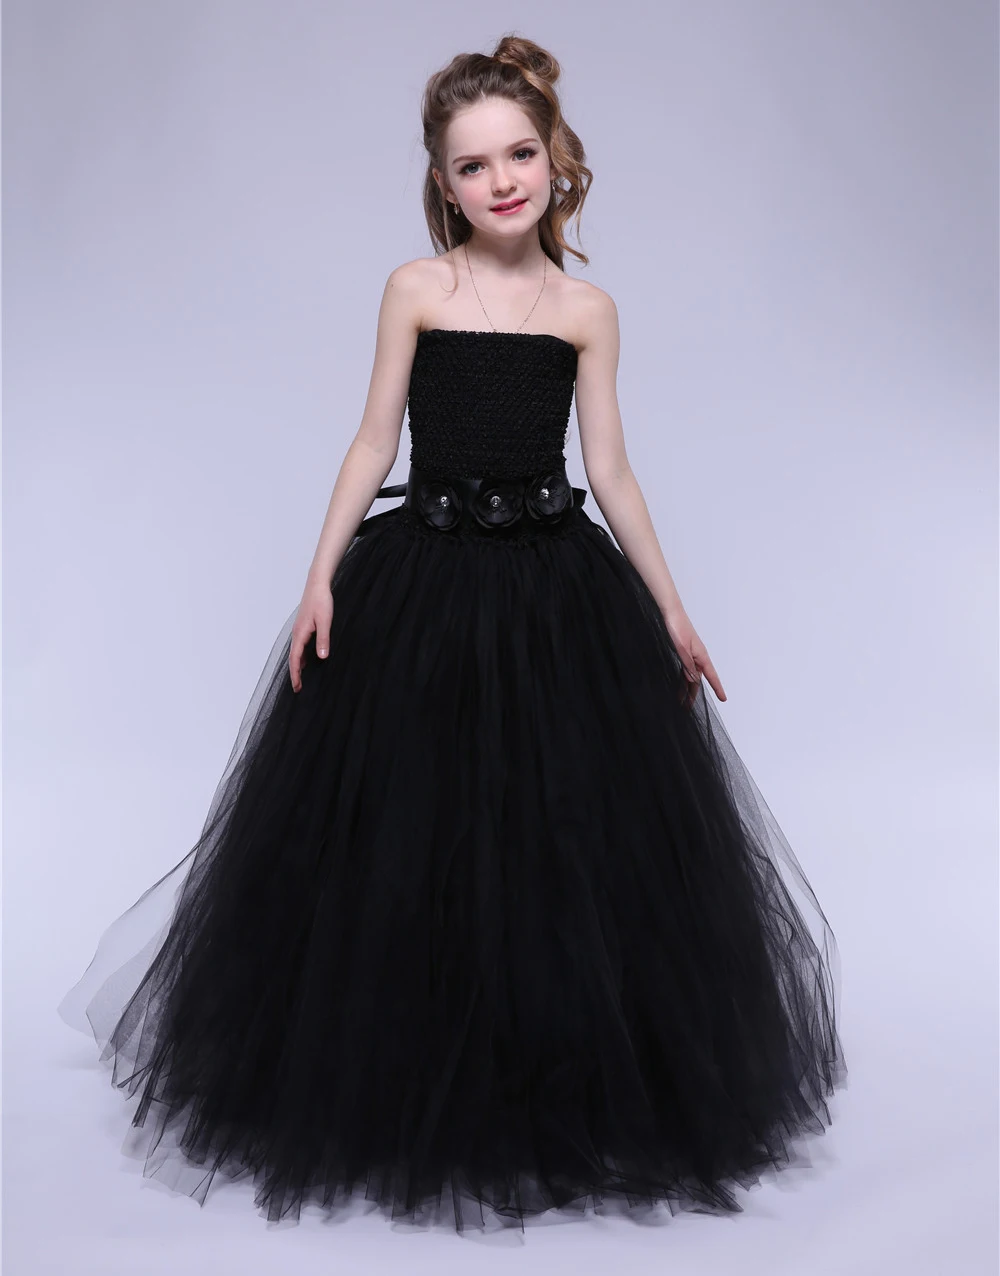 Solid Black Long Dress for Teenage Girls Princess Floor Dresses with Flower Belt Girl Halloween Pageant Costumes Kids 1-14Y | Детская